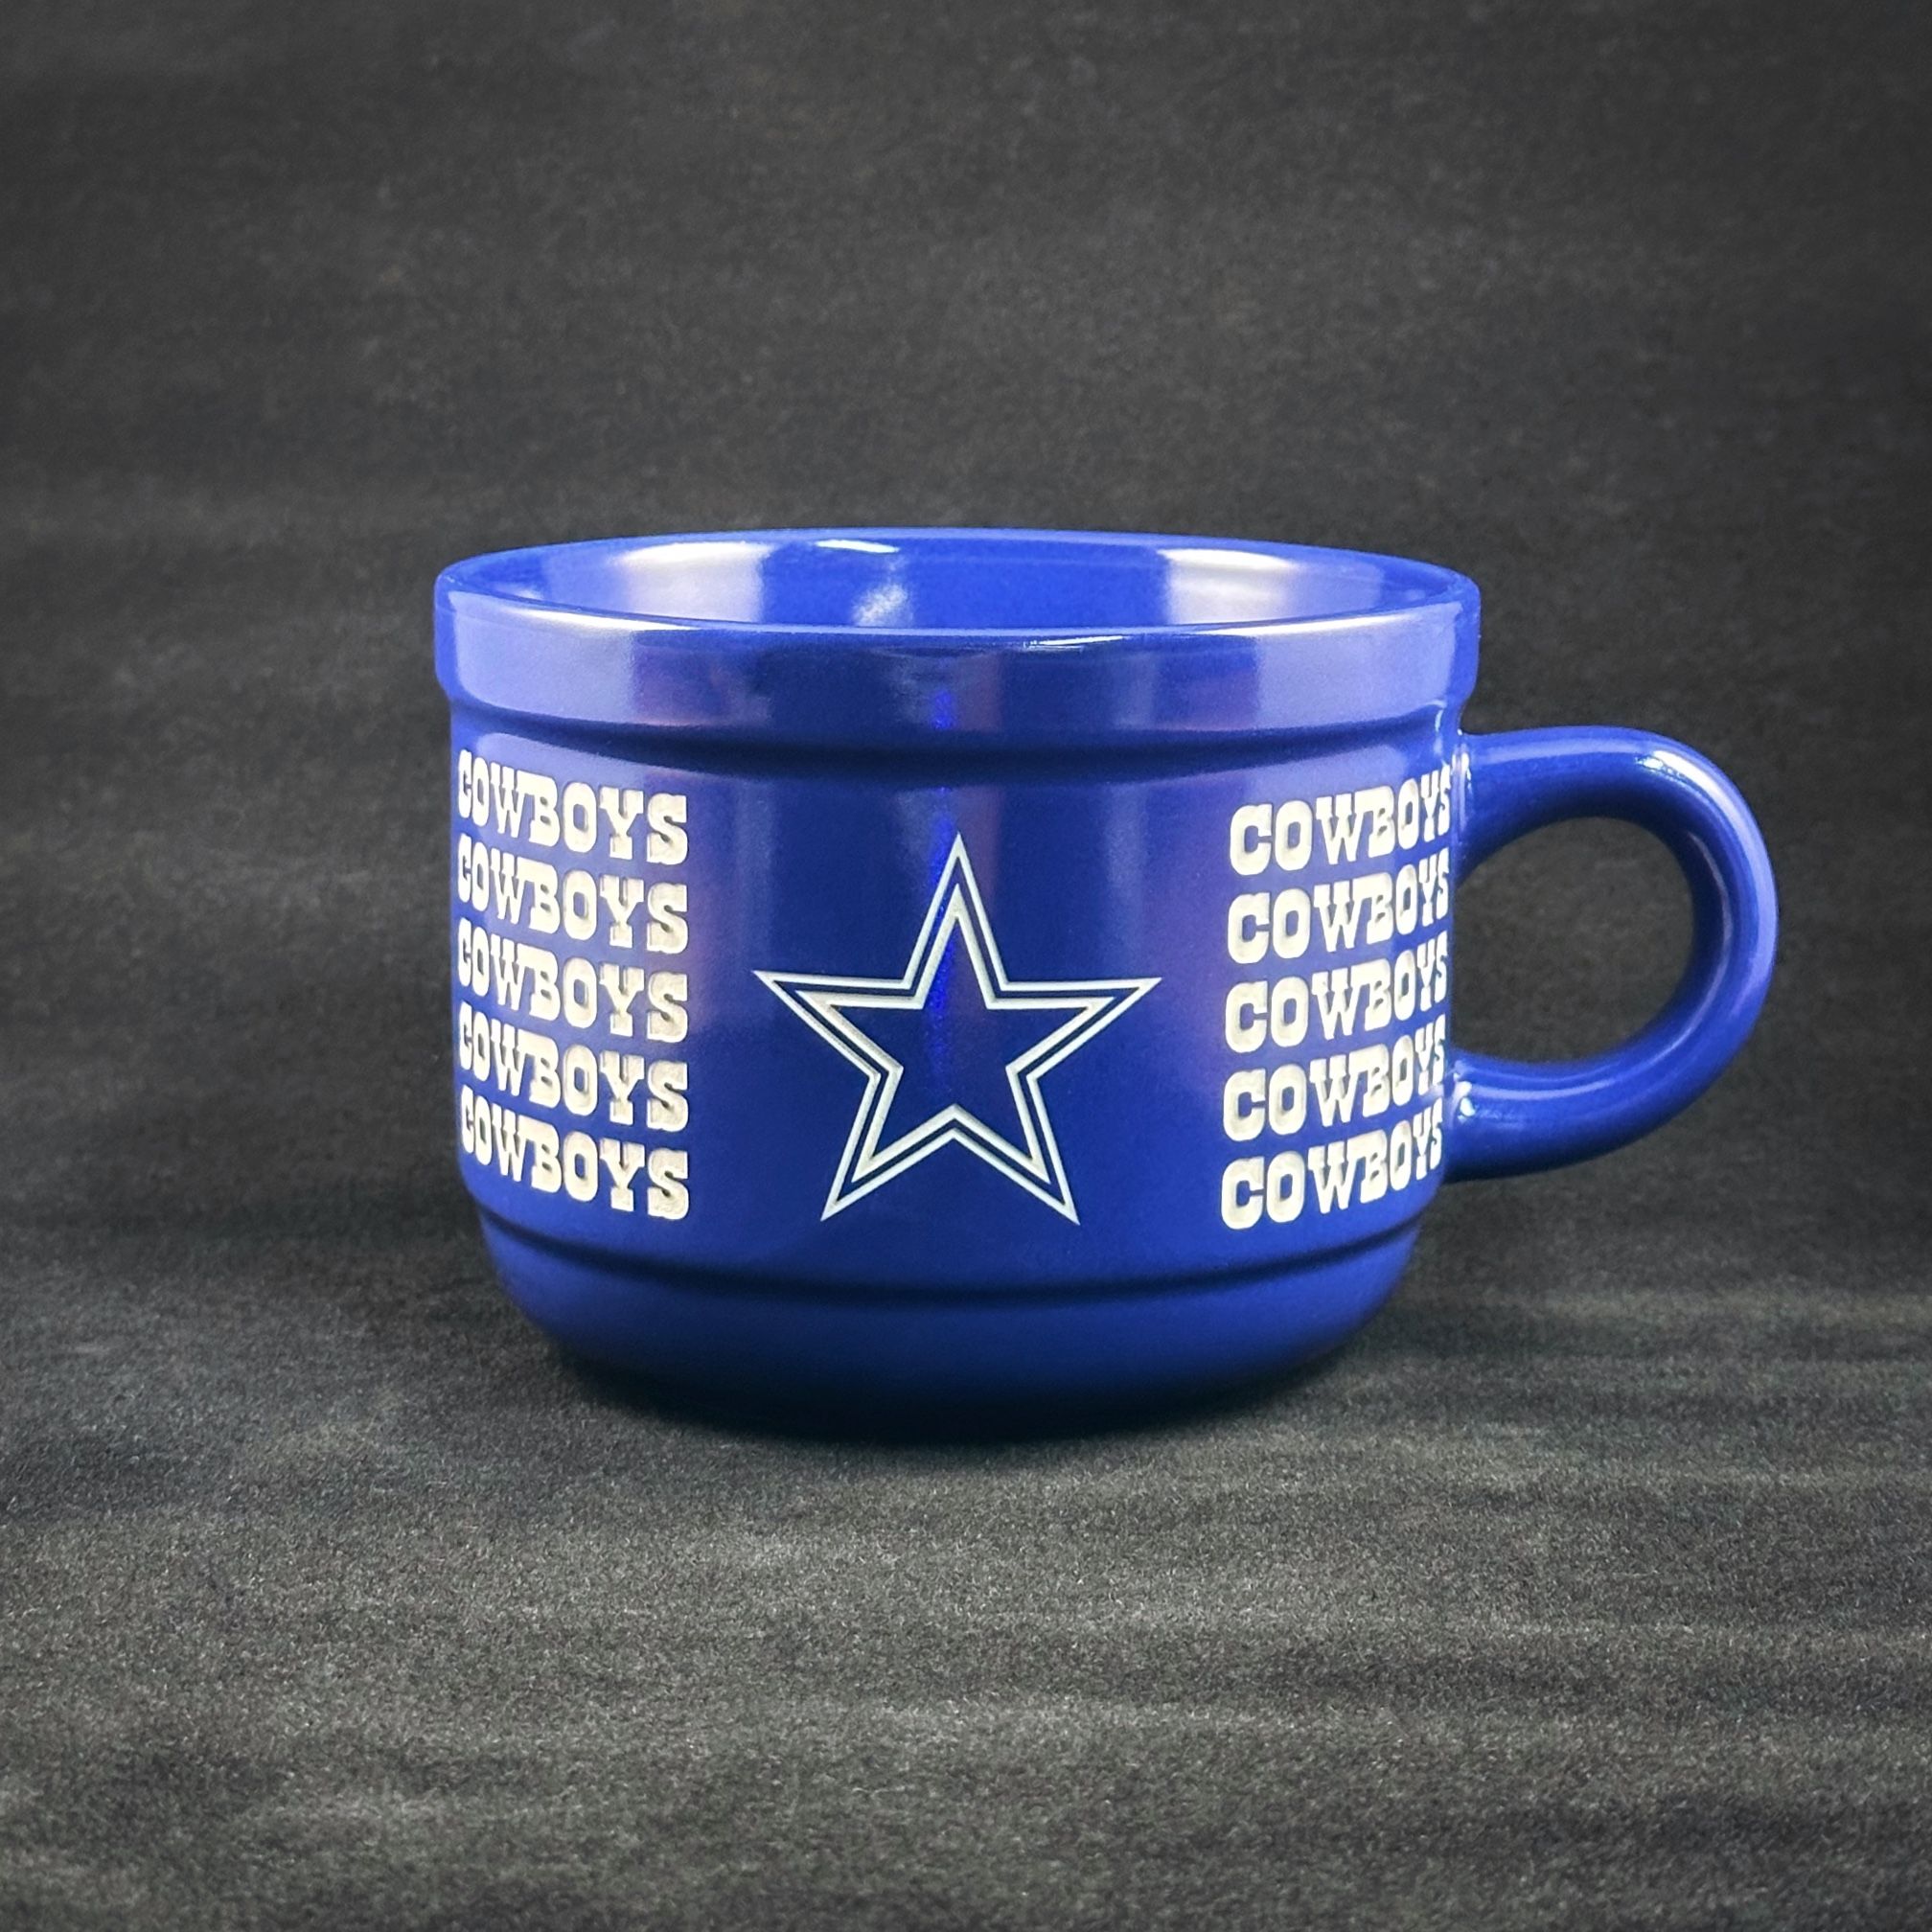 Sundays are for The Cowboys, Dallas Cowboys Coffee Mug for Sale by elhefe